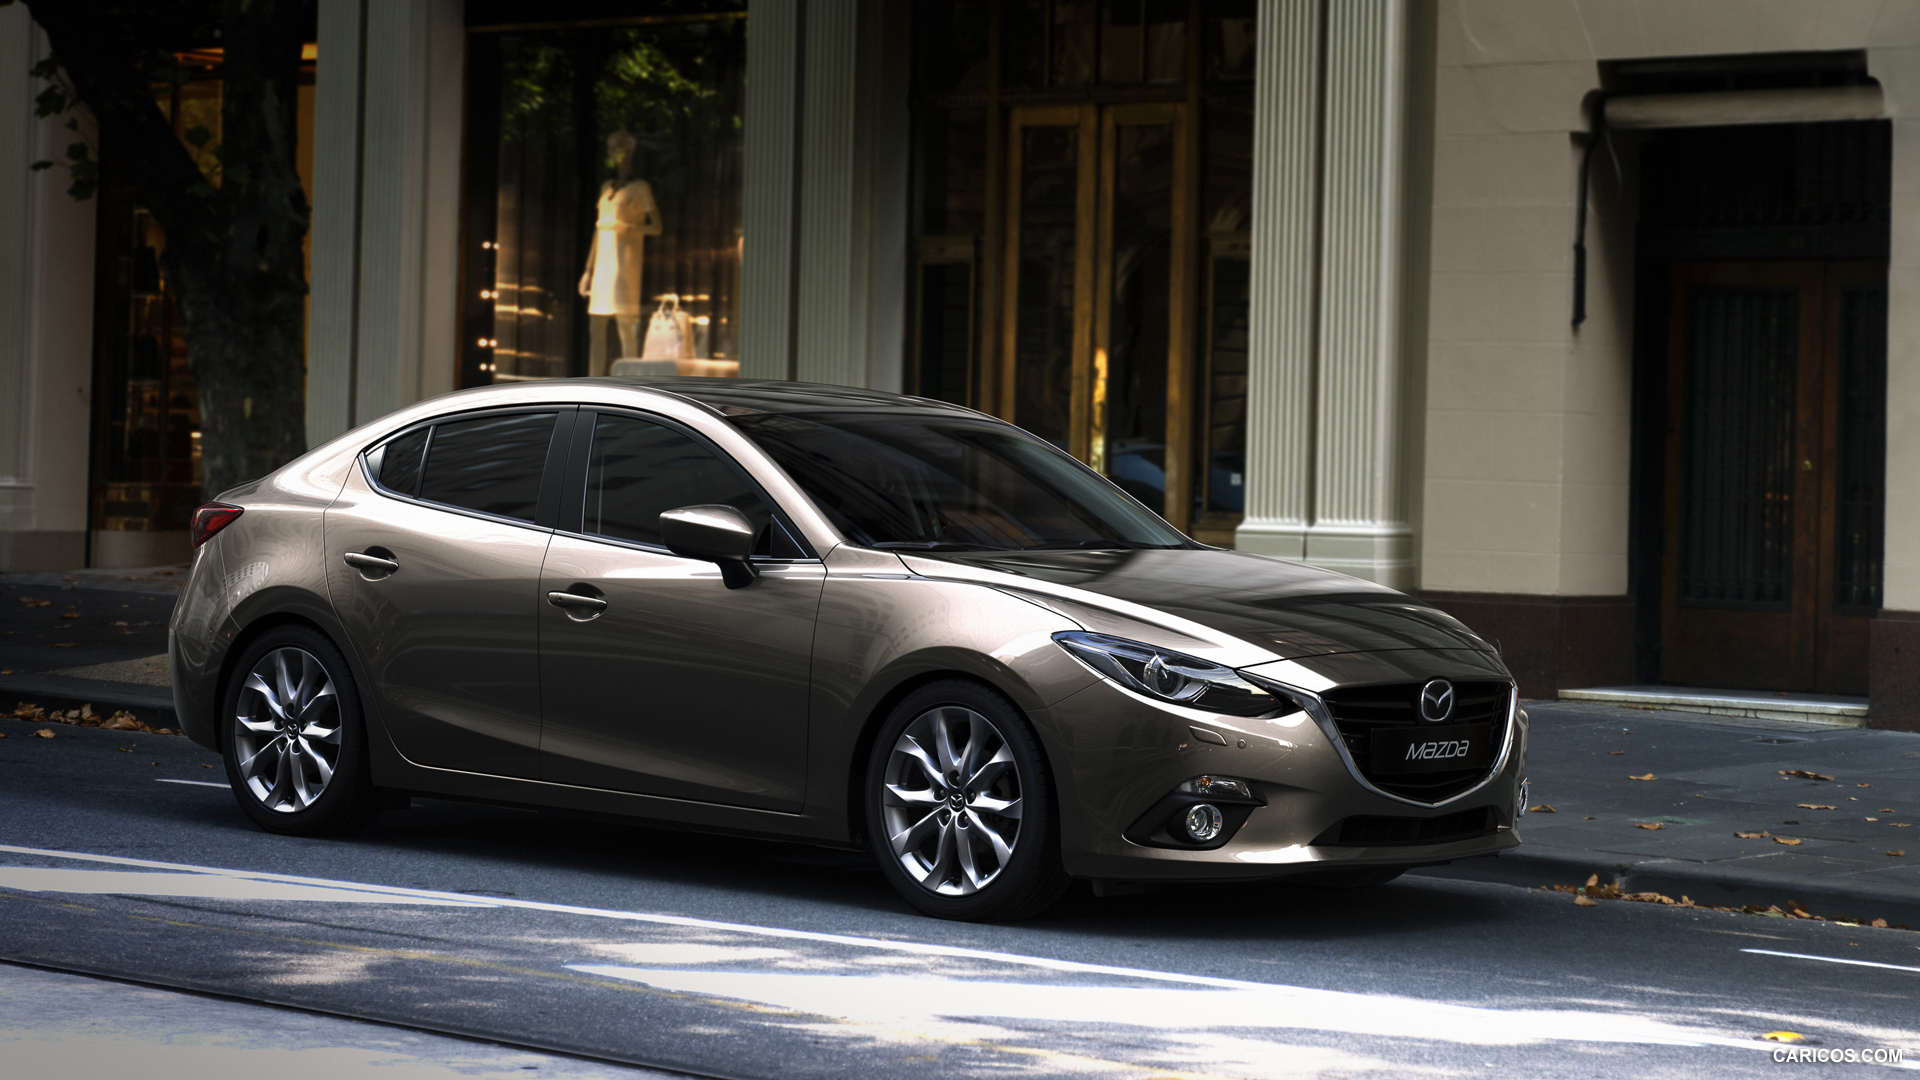 Mazda 3 drive. Мазда 3 новая седан. Mazda 3 2014. Mazda 3 2014 седан. Mazda 3 2015 седан.